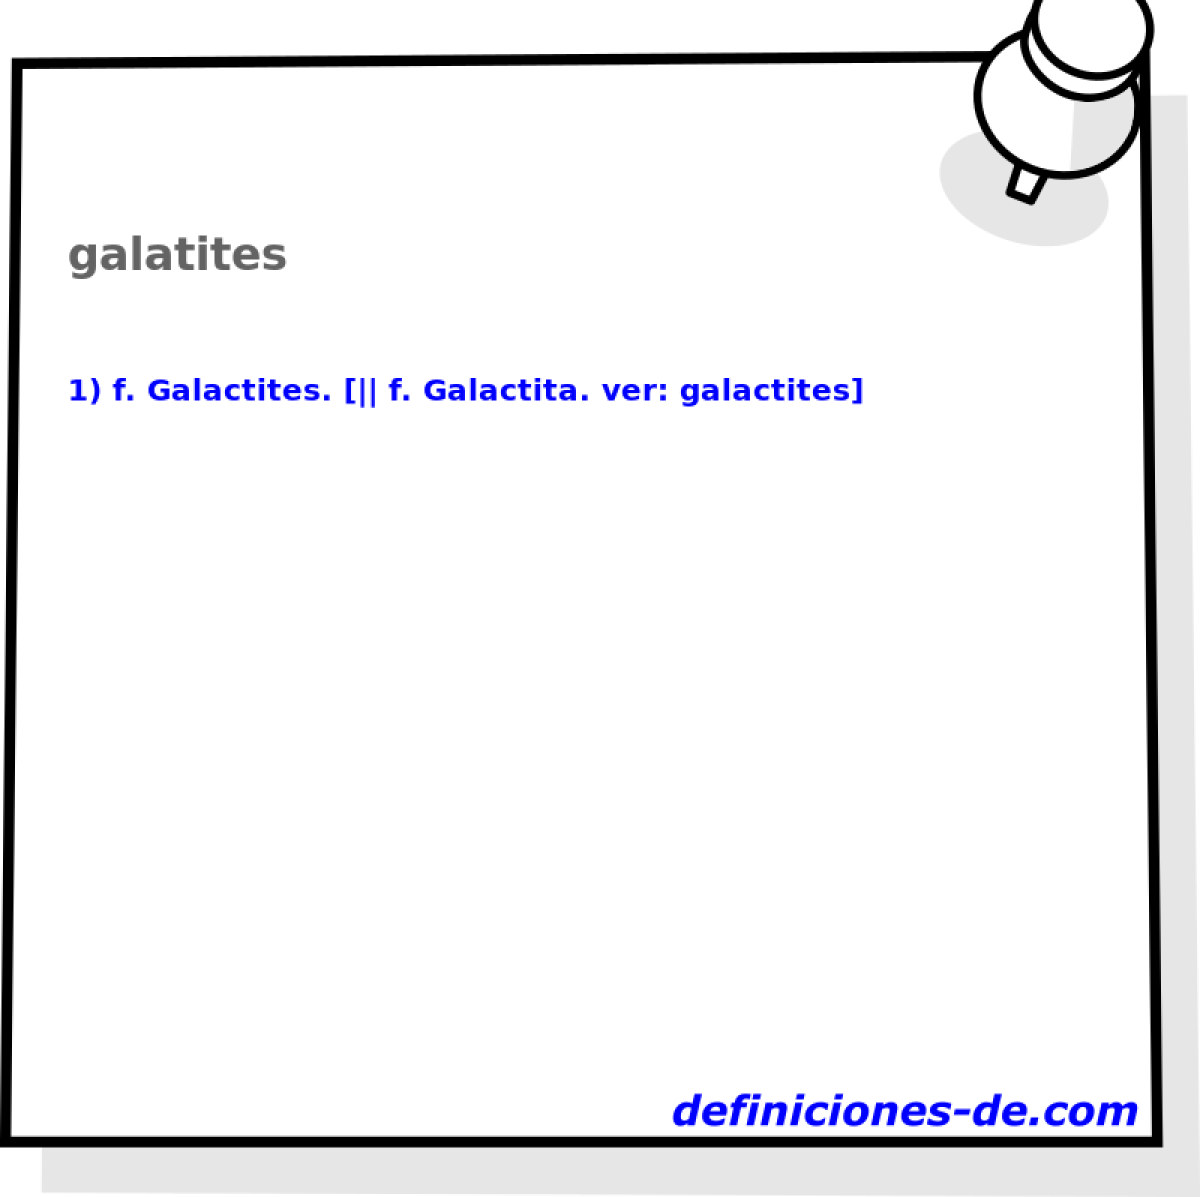 galatites 